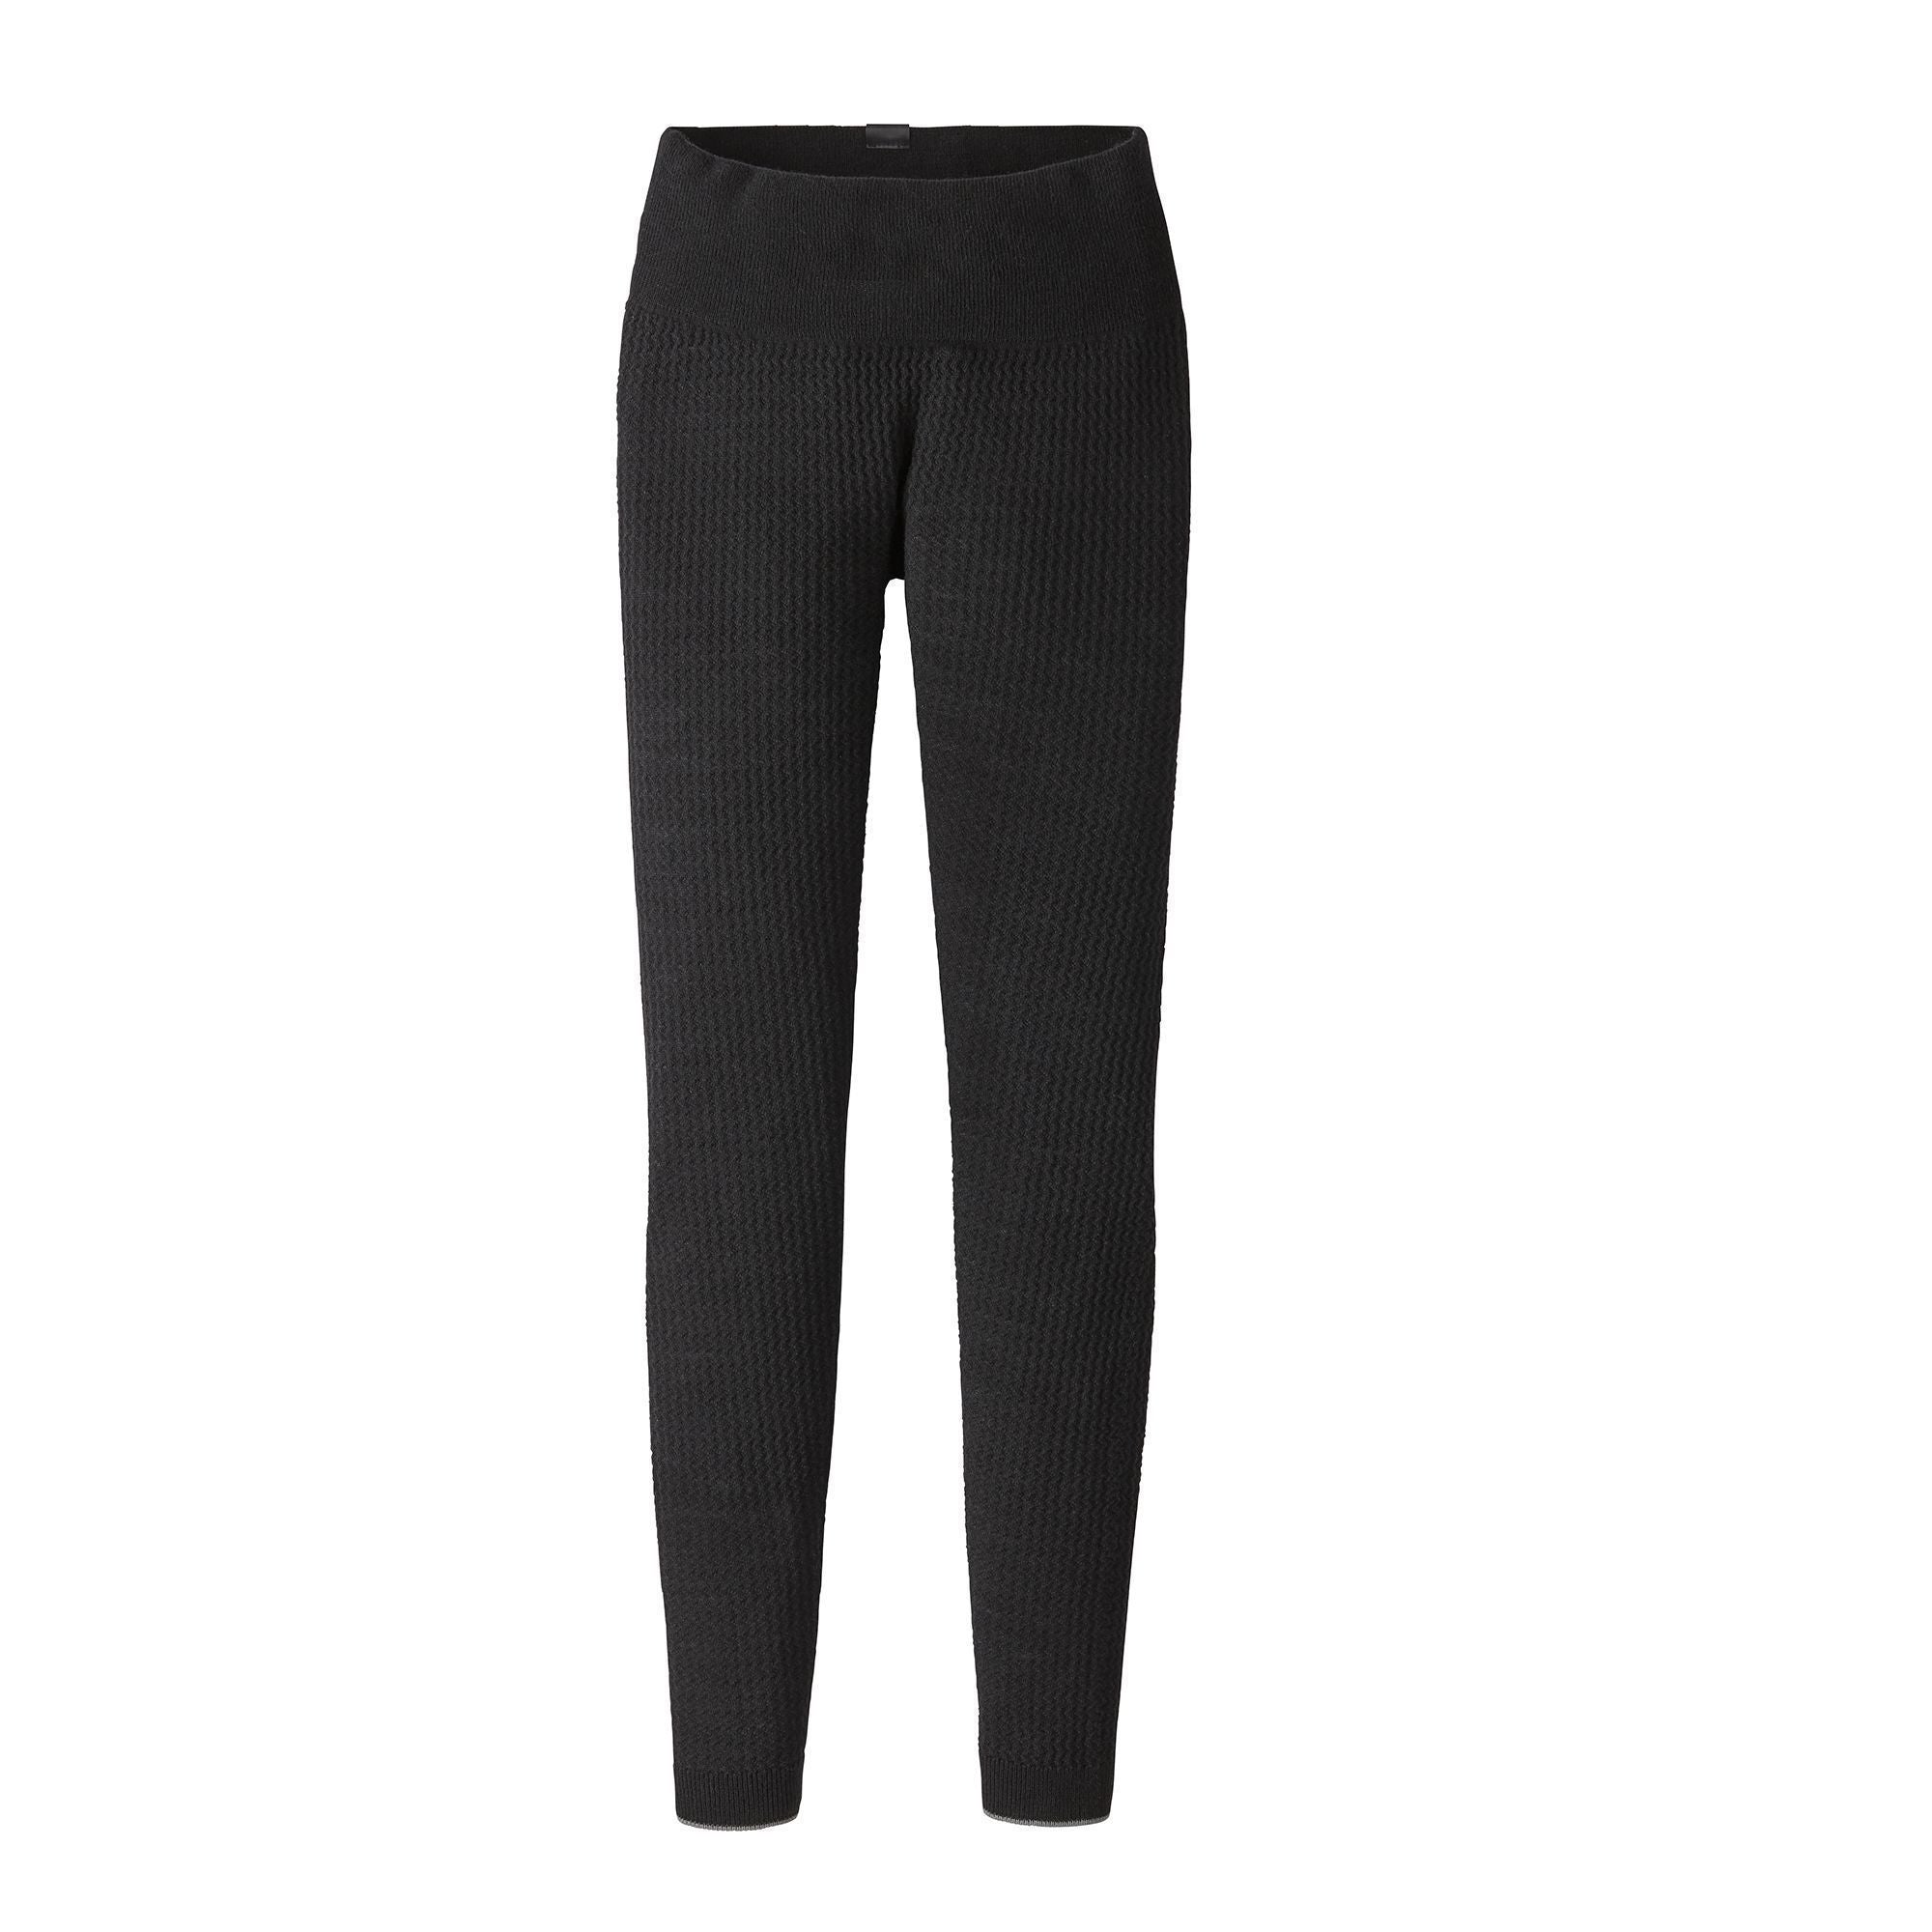 Patagonia unisex jeans-pantalon capilene air bottoms pant black xs